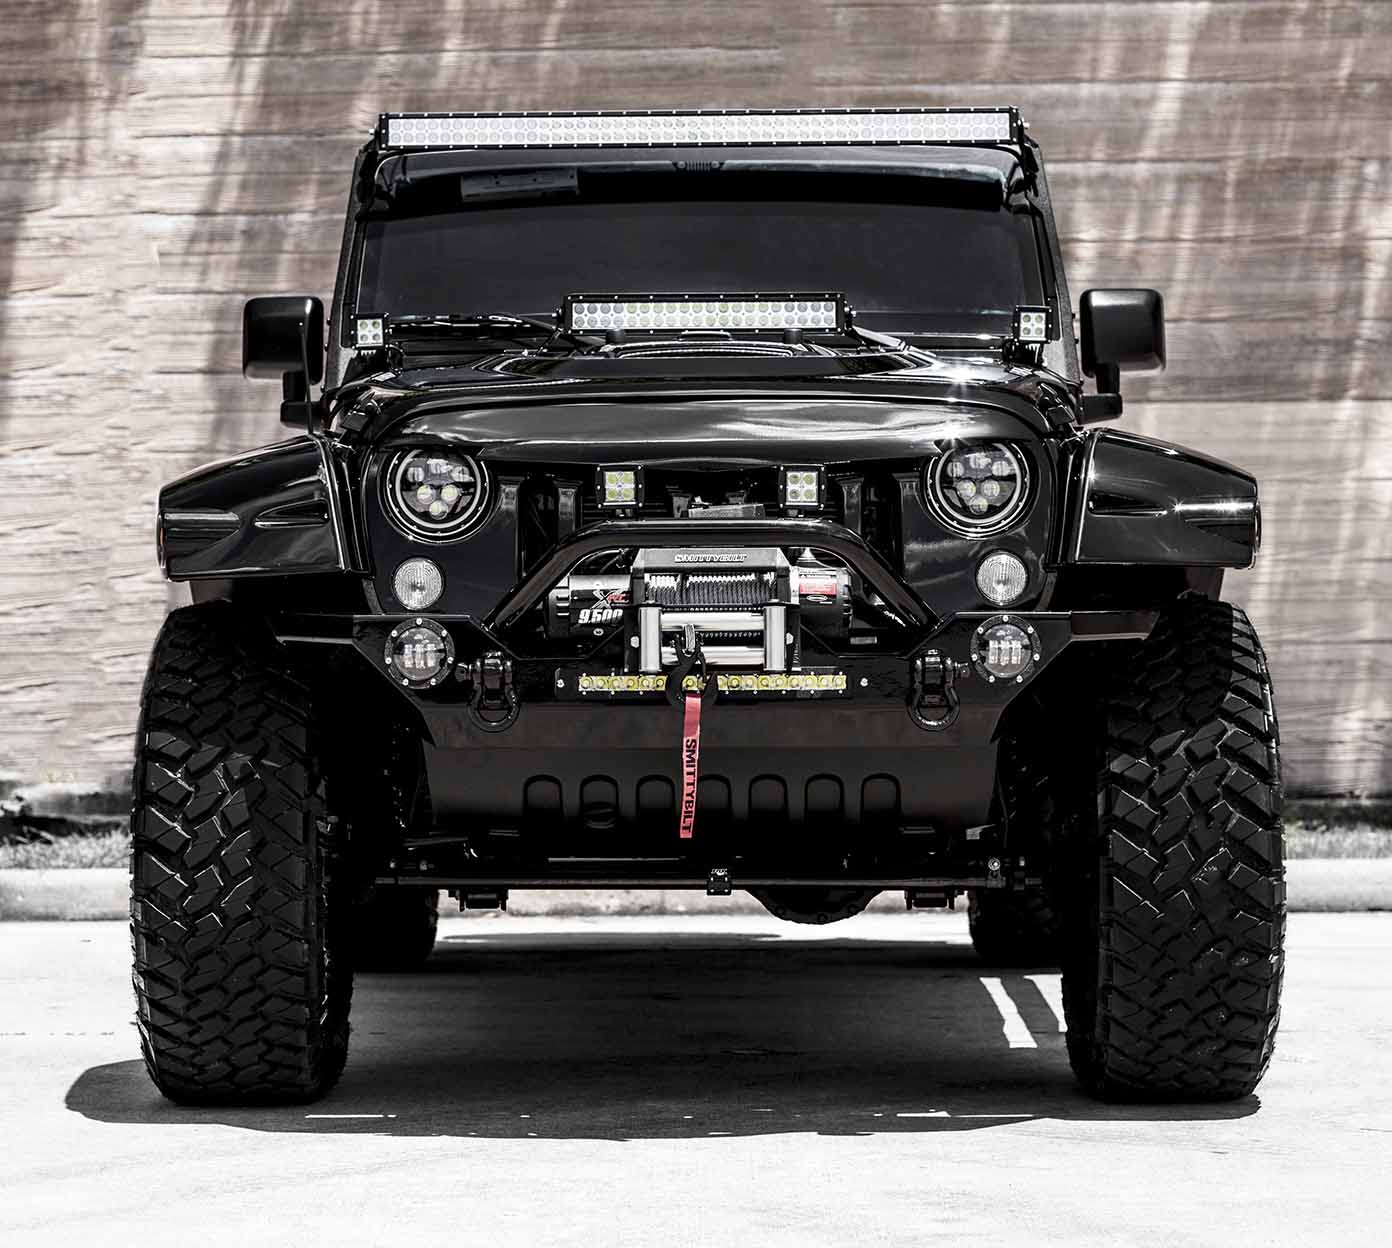 JK Series | Diamond Edition | Build Your Own Jeep | Houston, TX & Salt Lake  City, UT | American Custom Jeep